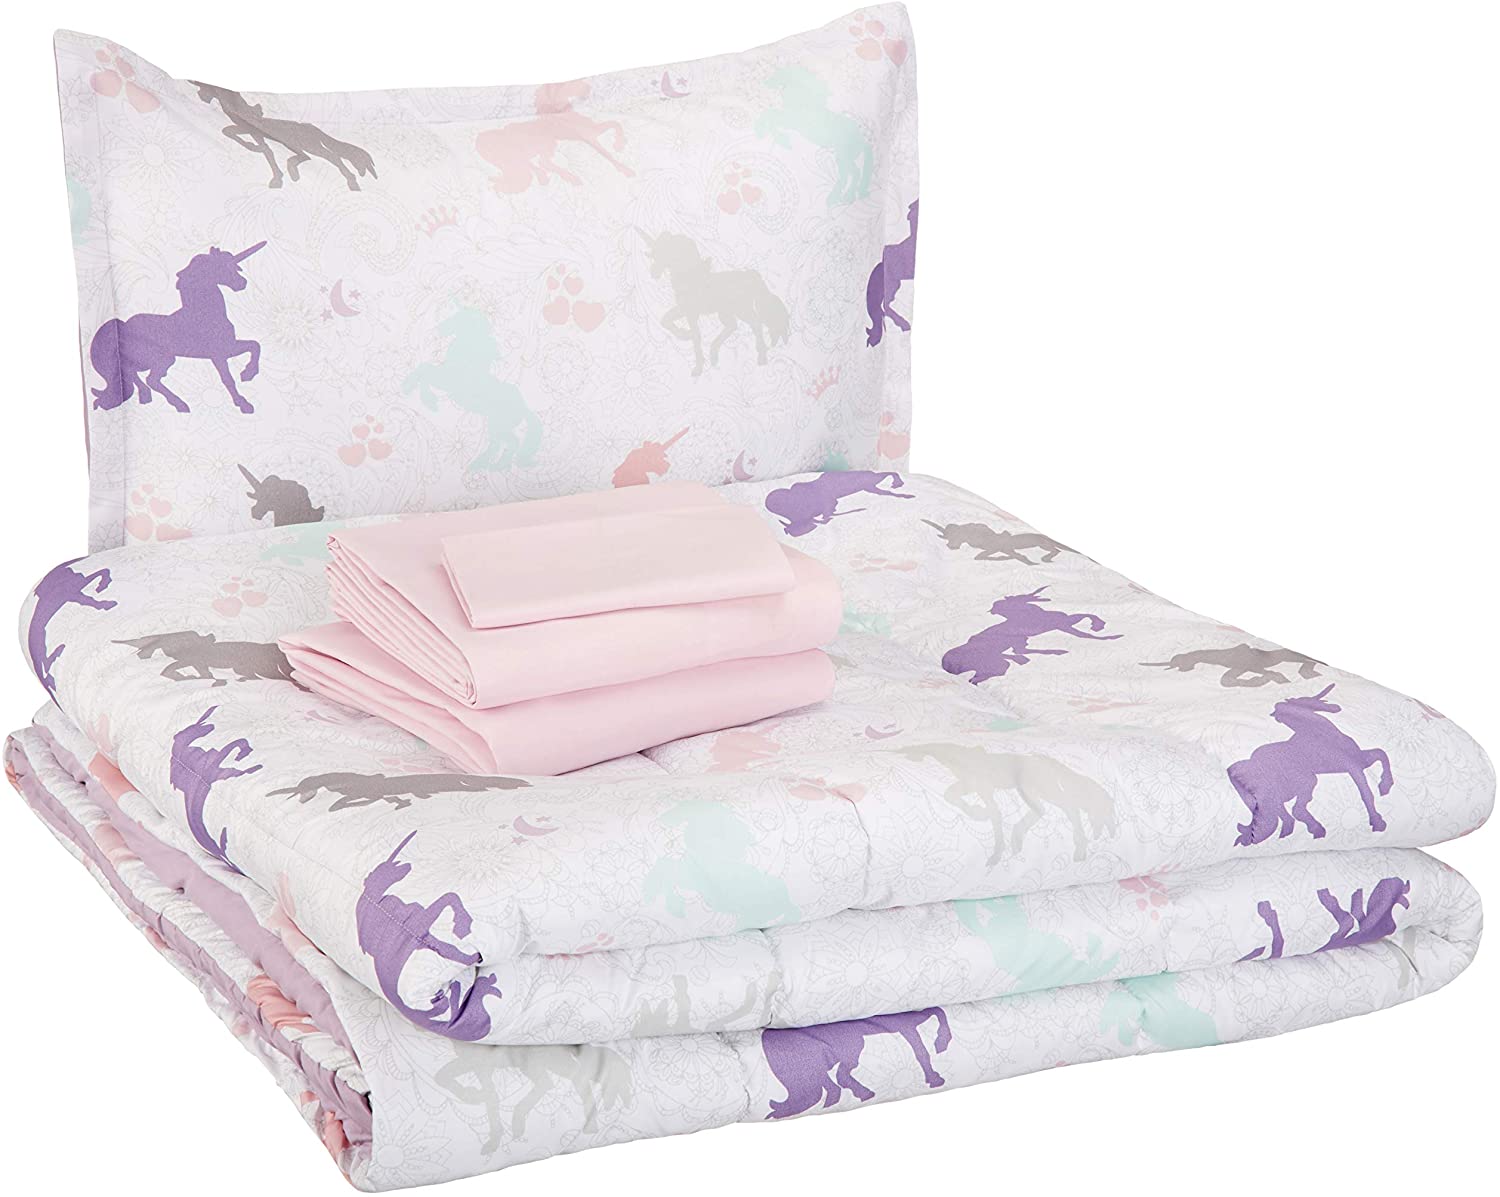 AmazonBasics Purple Unicorn Microfiber Girl’s Bedding Set